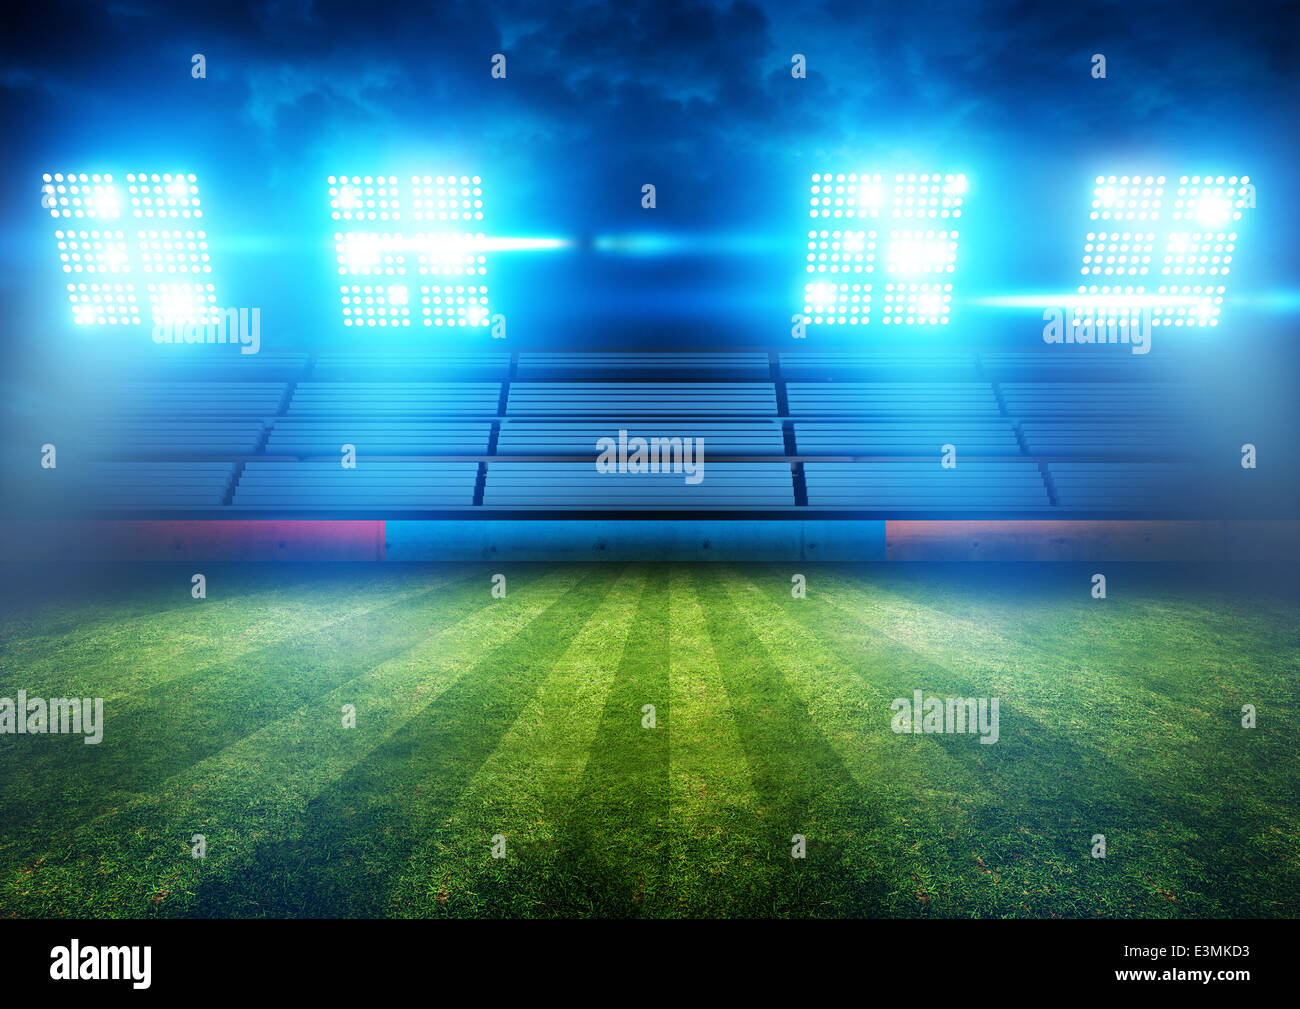 football-stadium-lights-background-illustration-E3MKD3.jpg